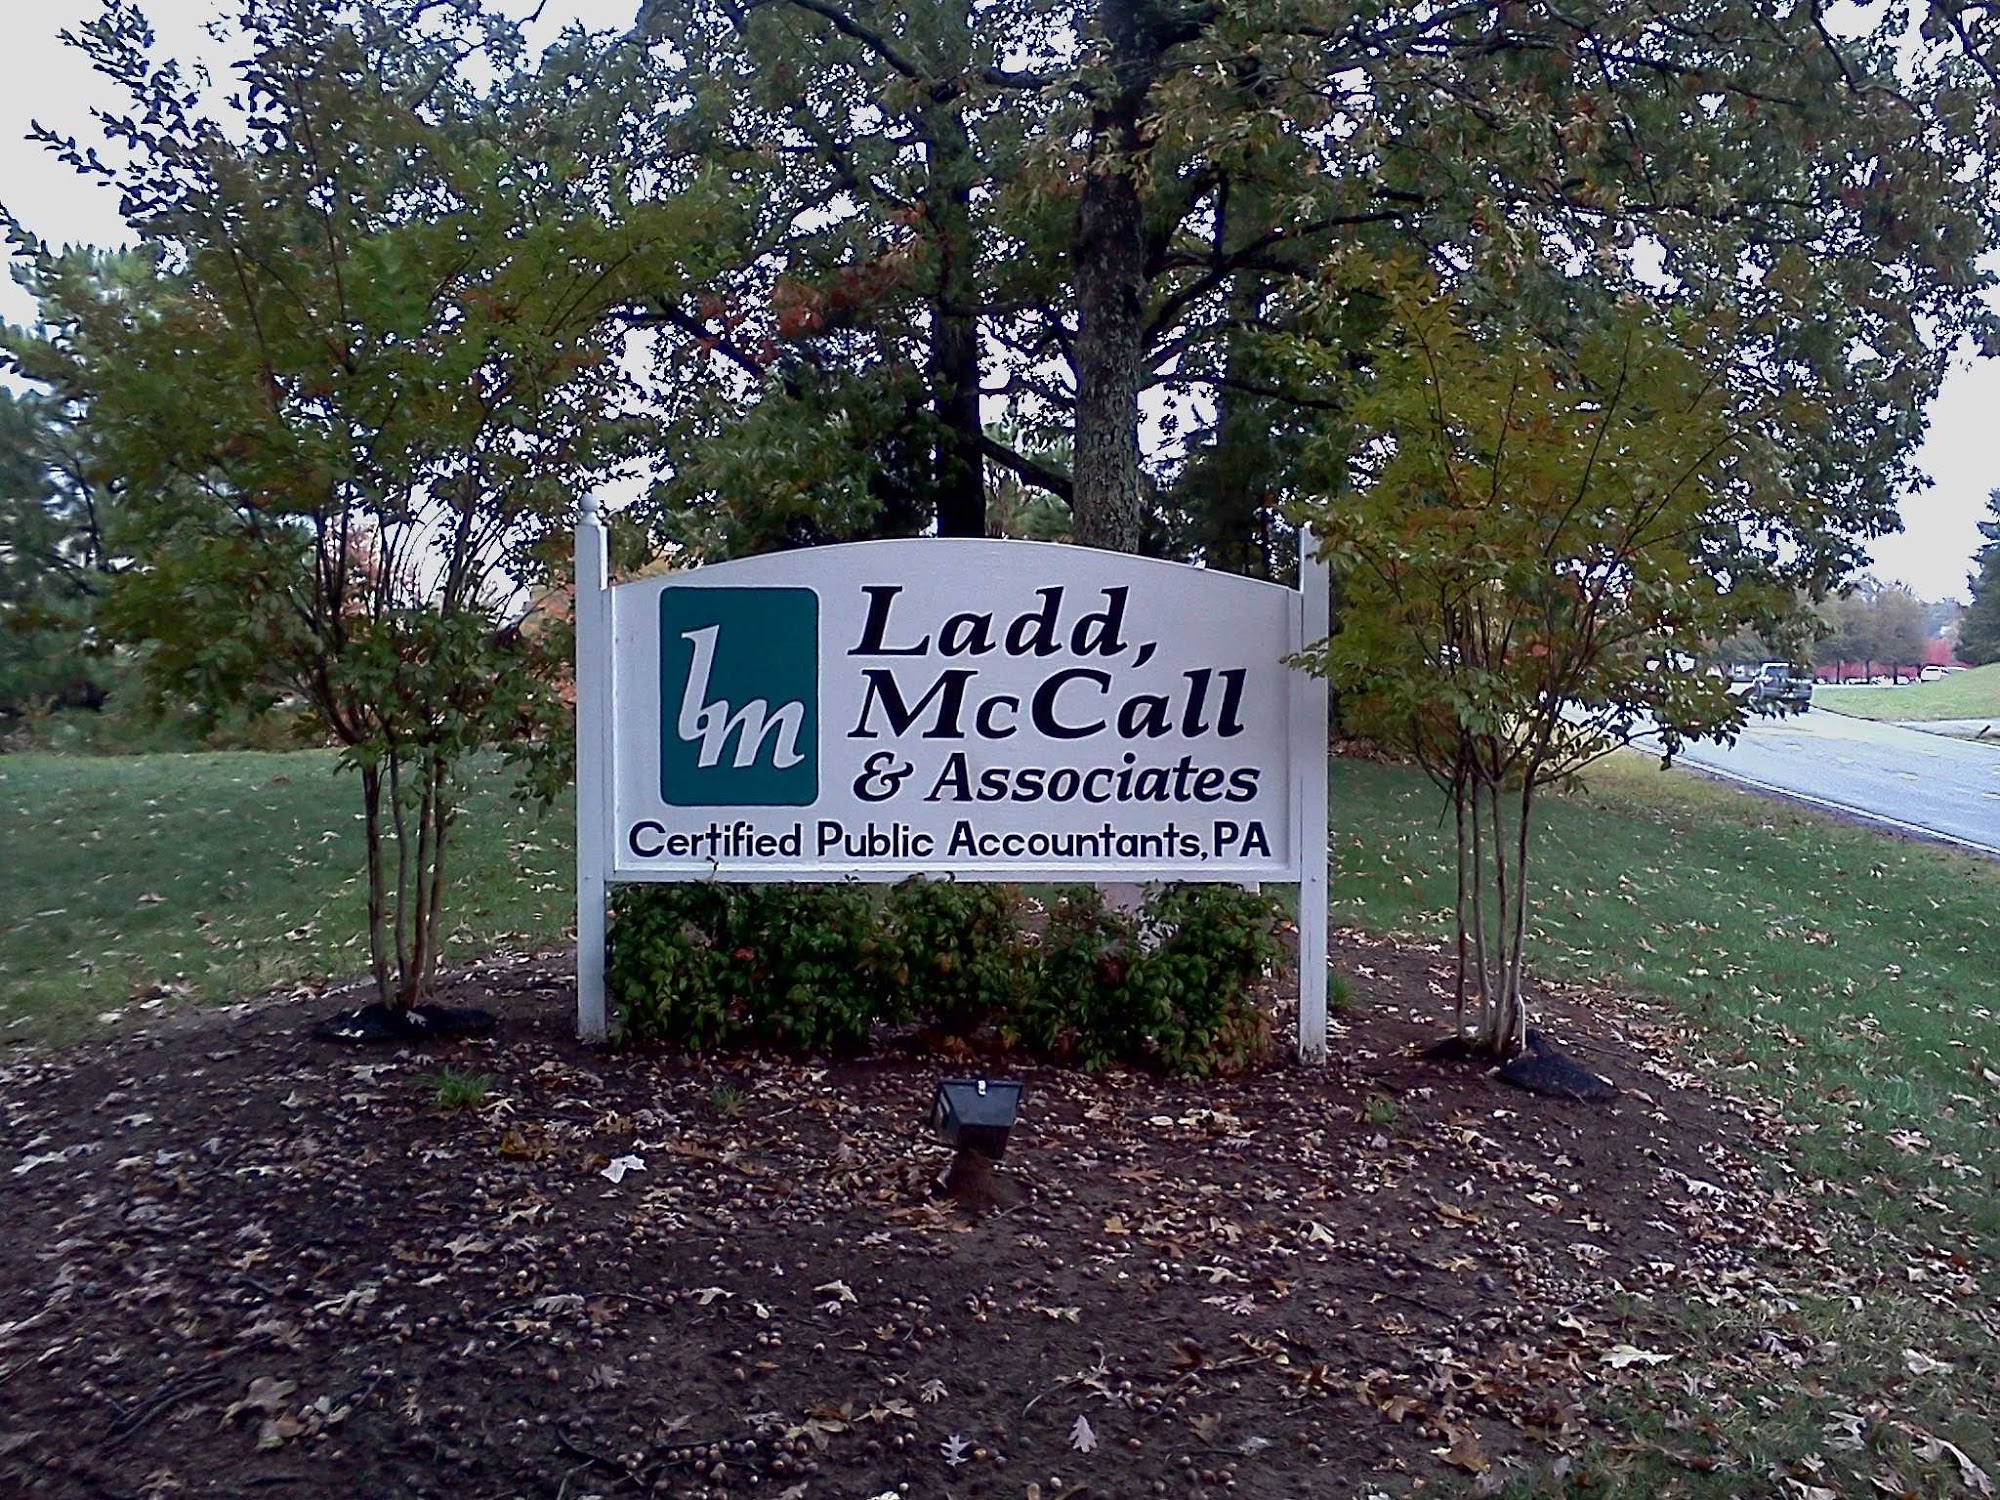 Ladd, McCall & Associates, Certified Public Accountants, PA